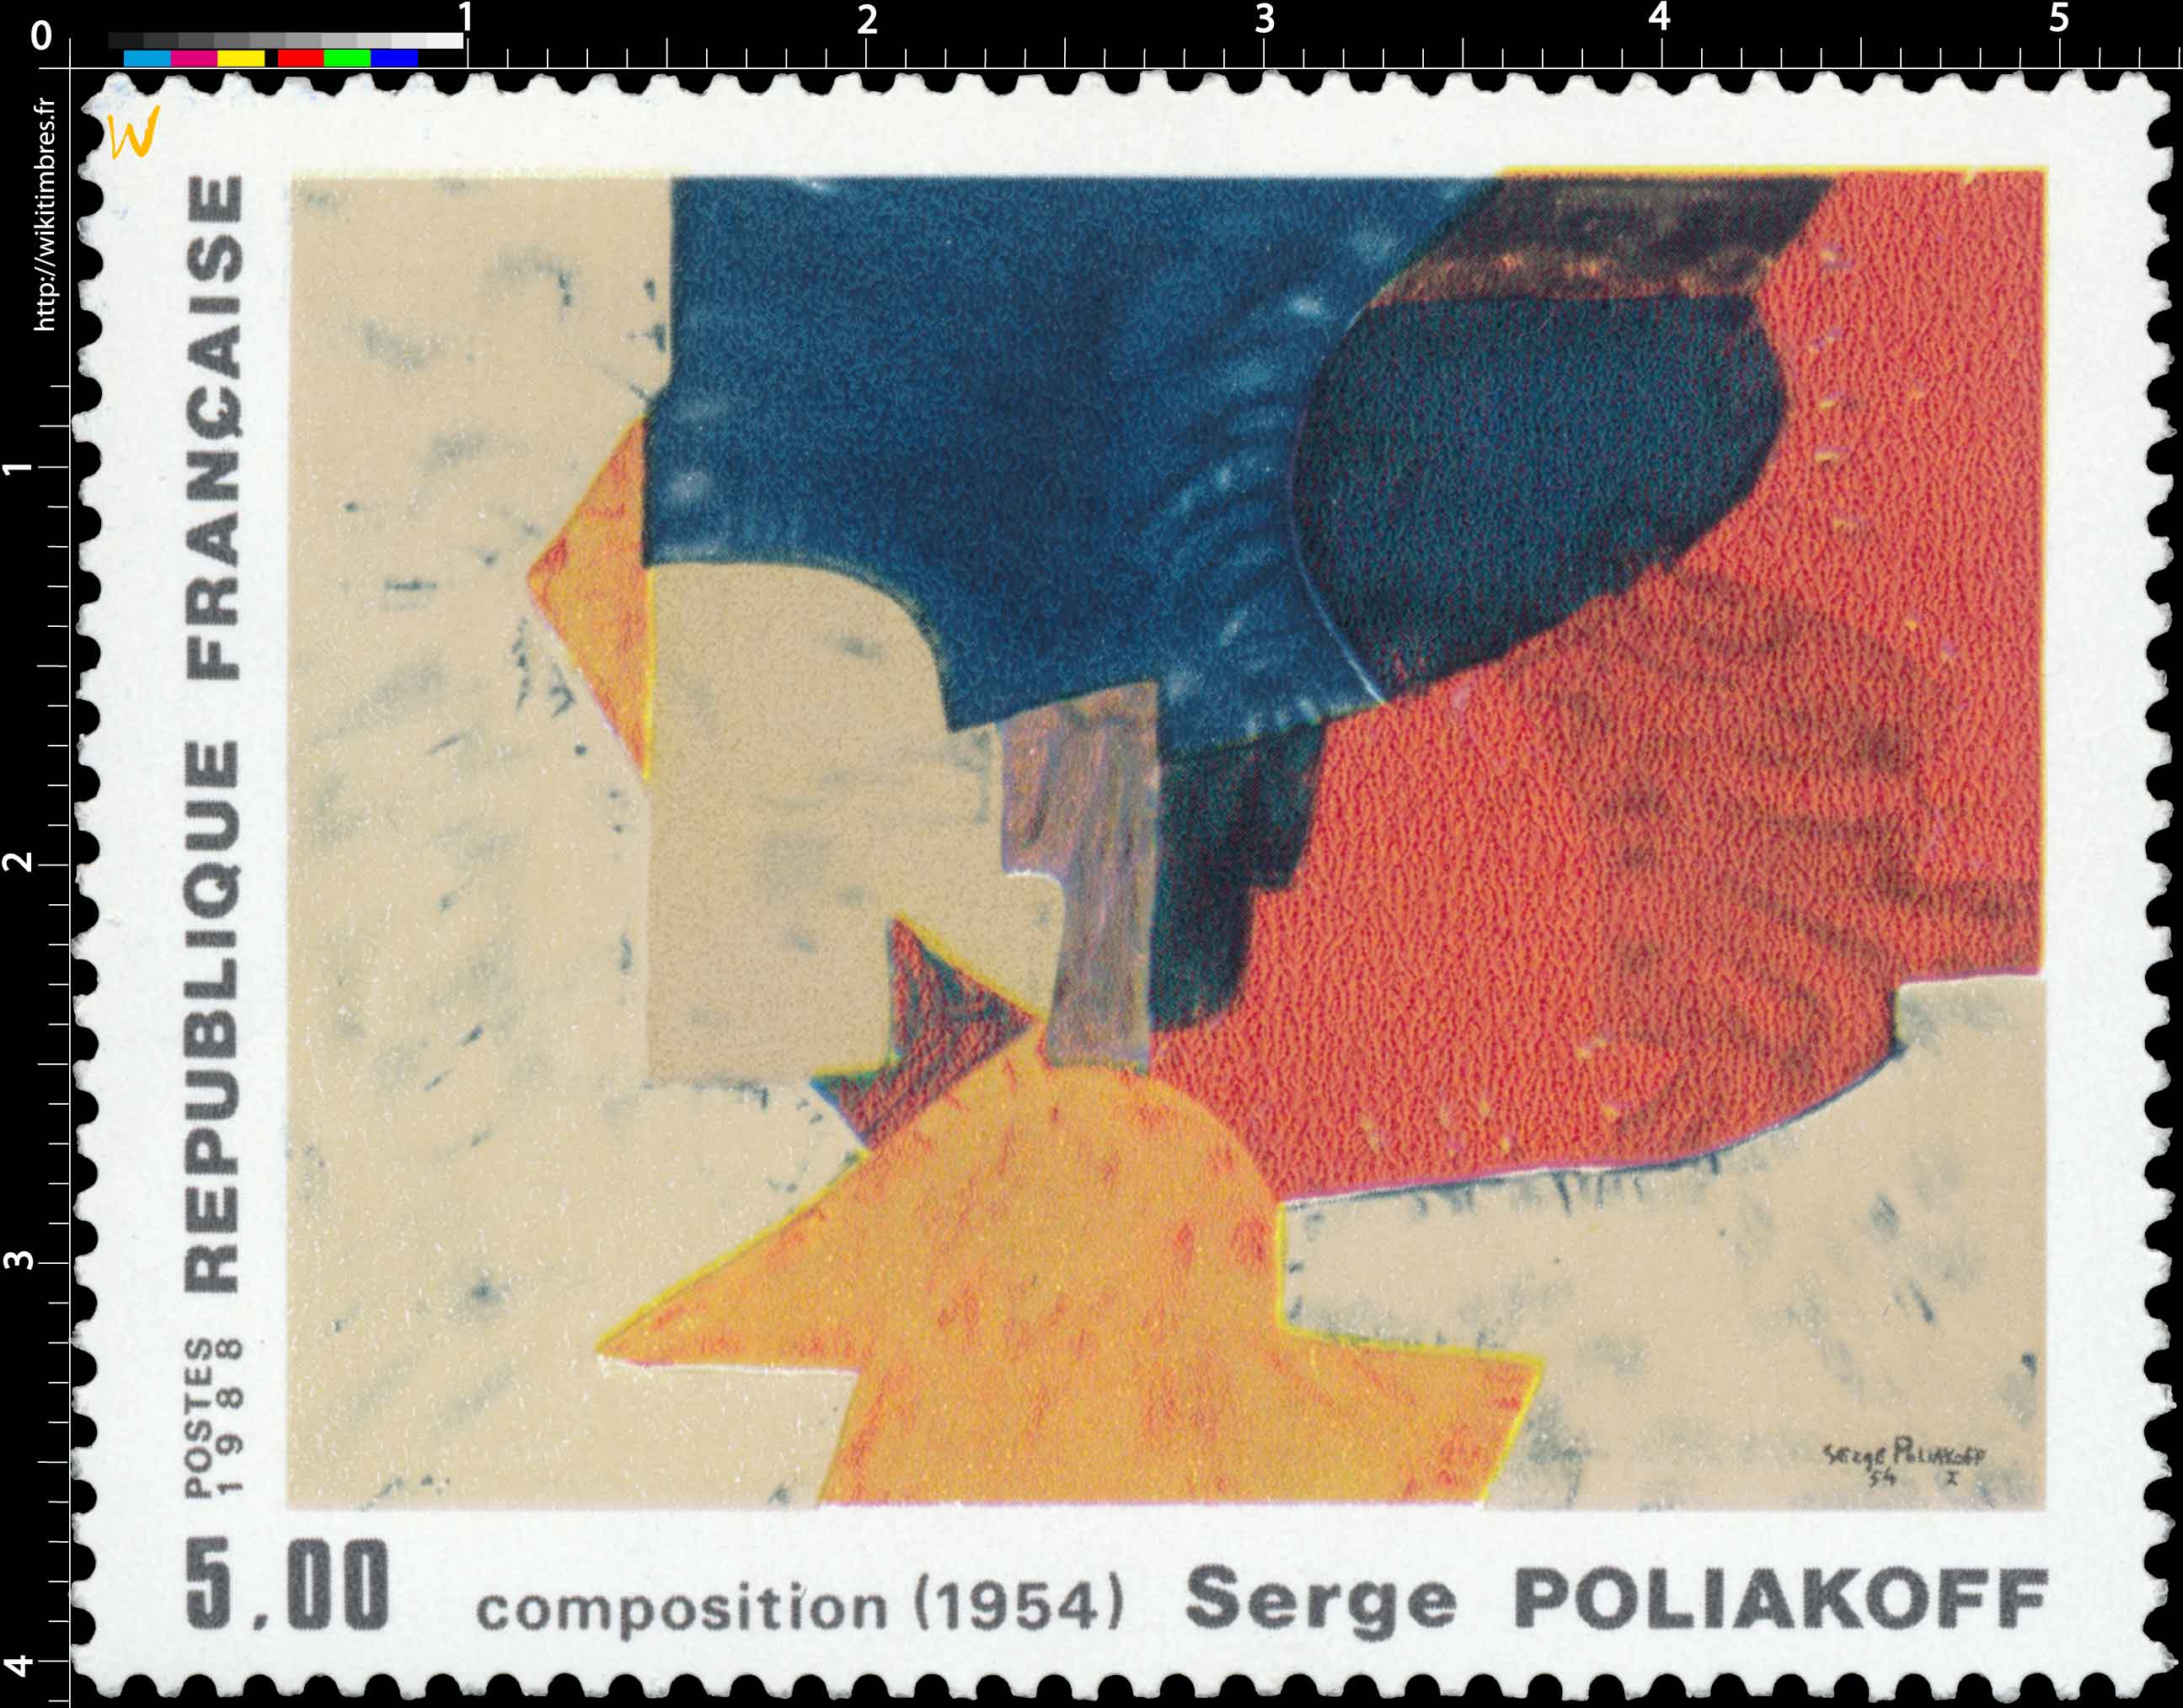 1988 Composition (1954) Serge POLIAKOFF